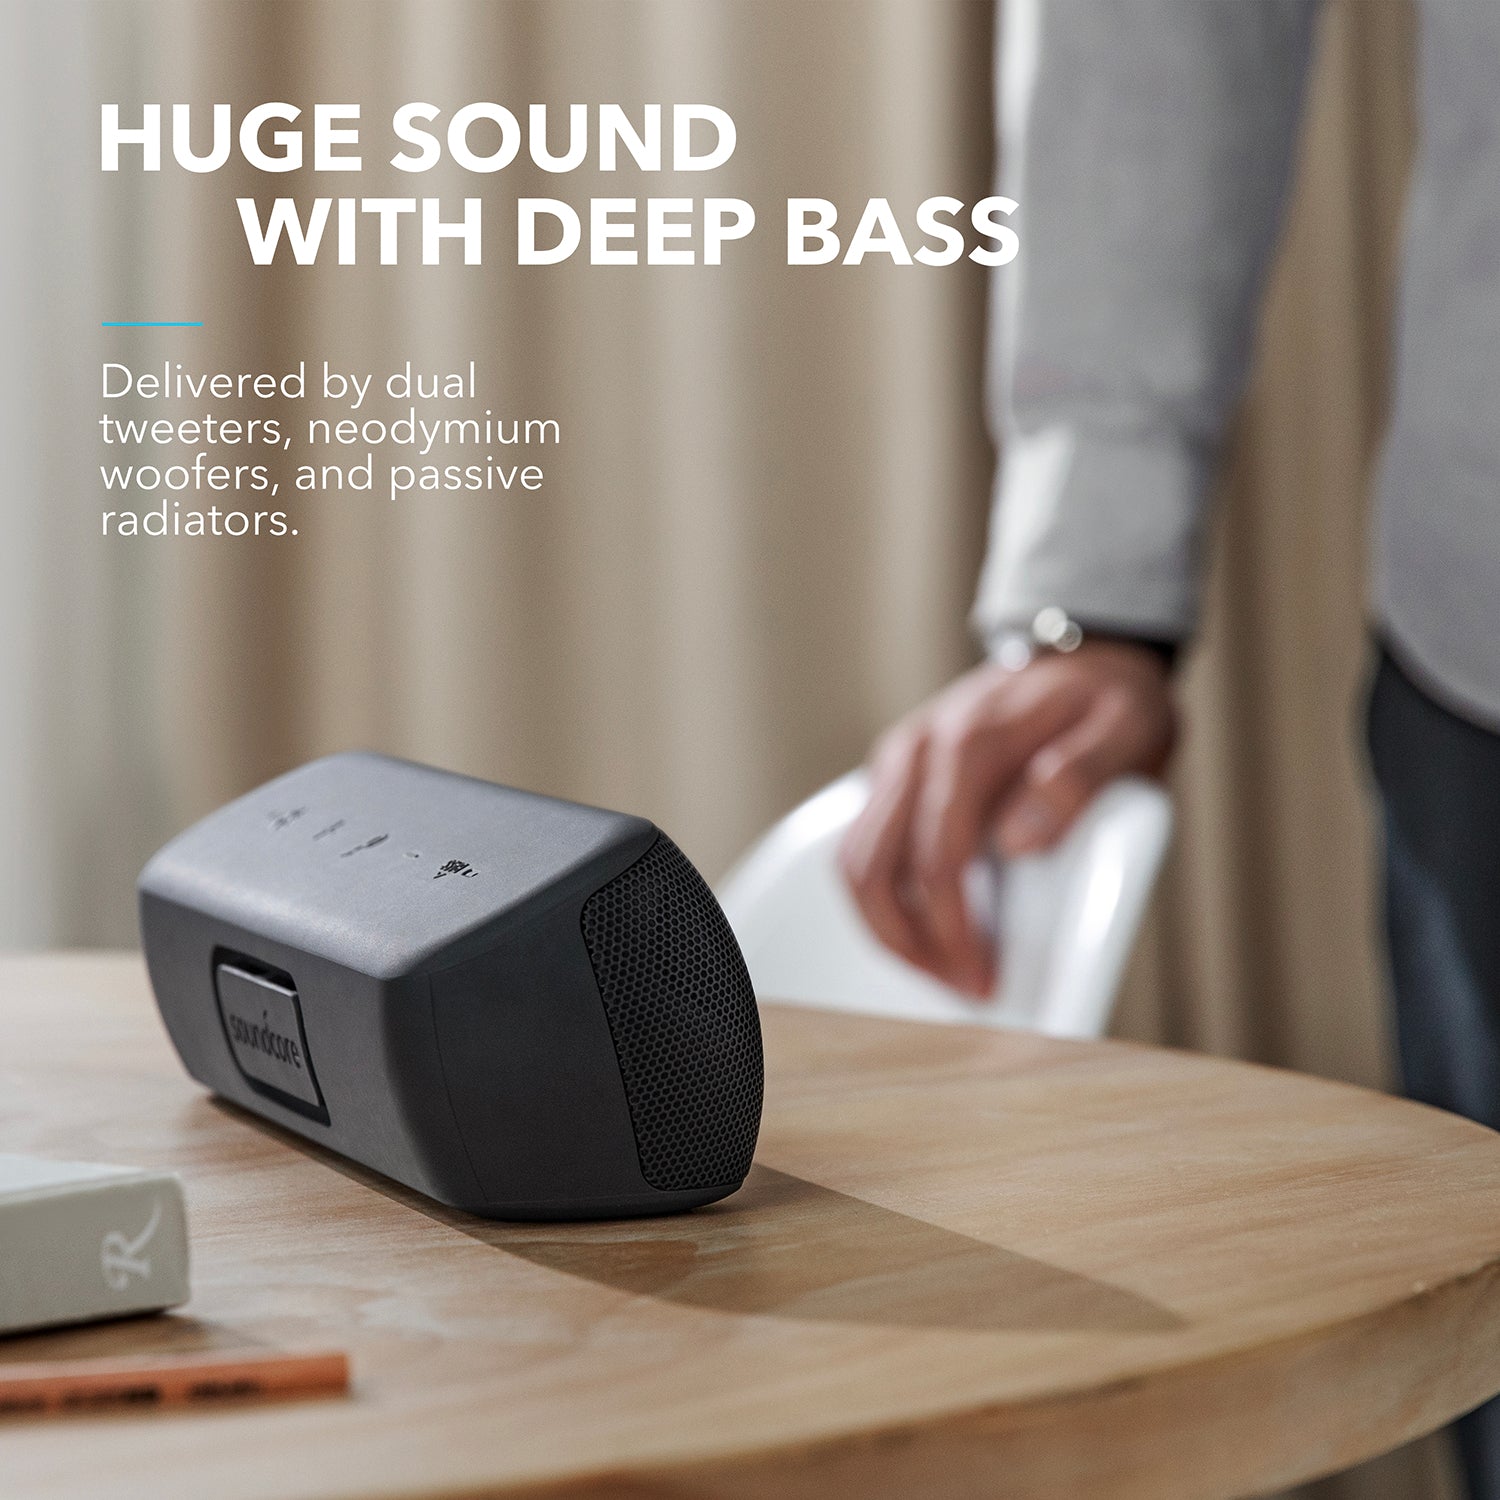 soundcore Motion X500 Wireless Hi-Fi Speaker - soundcore EU